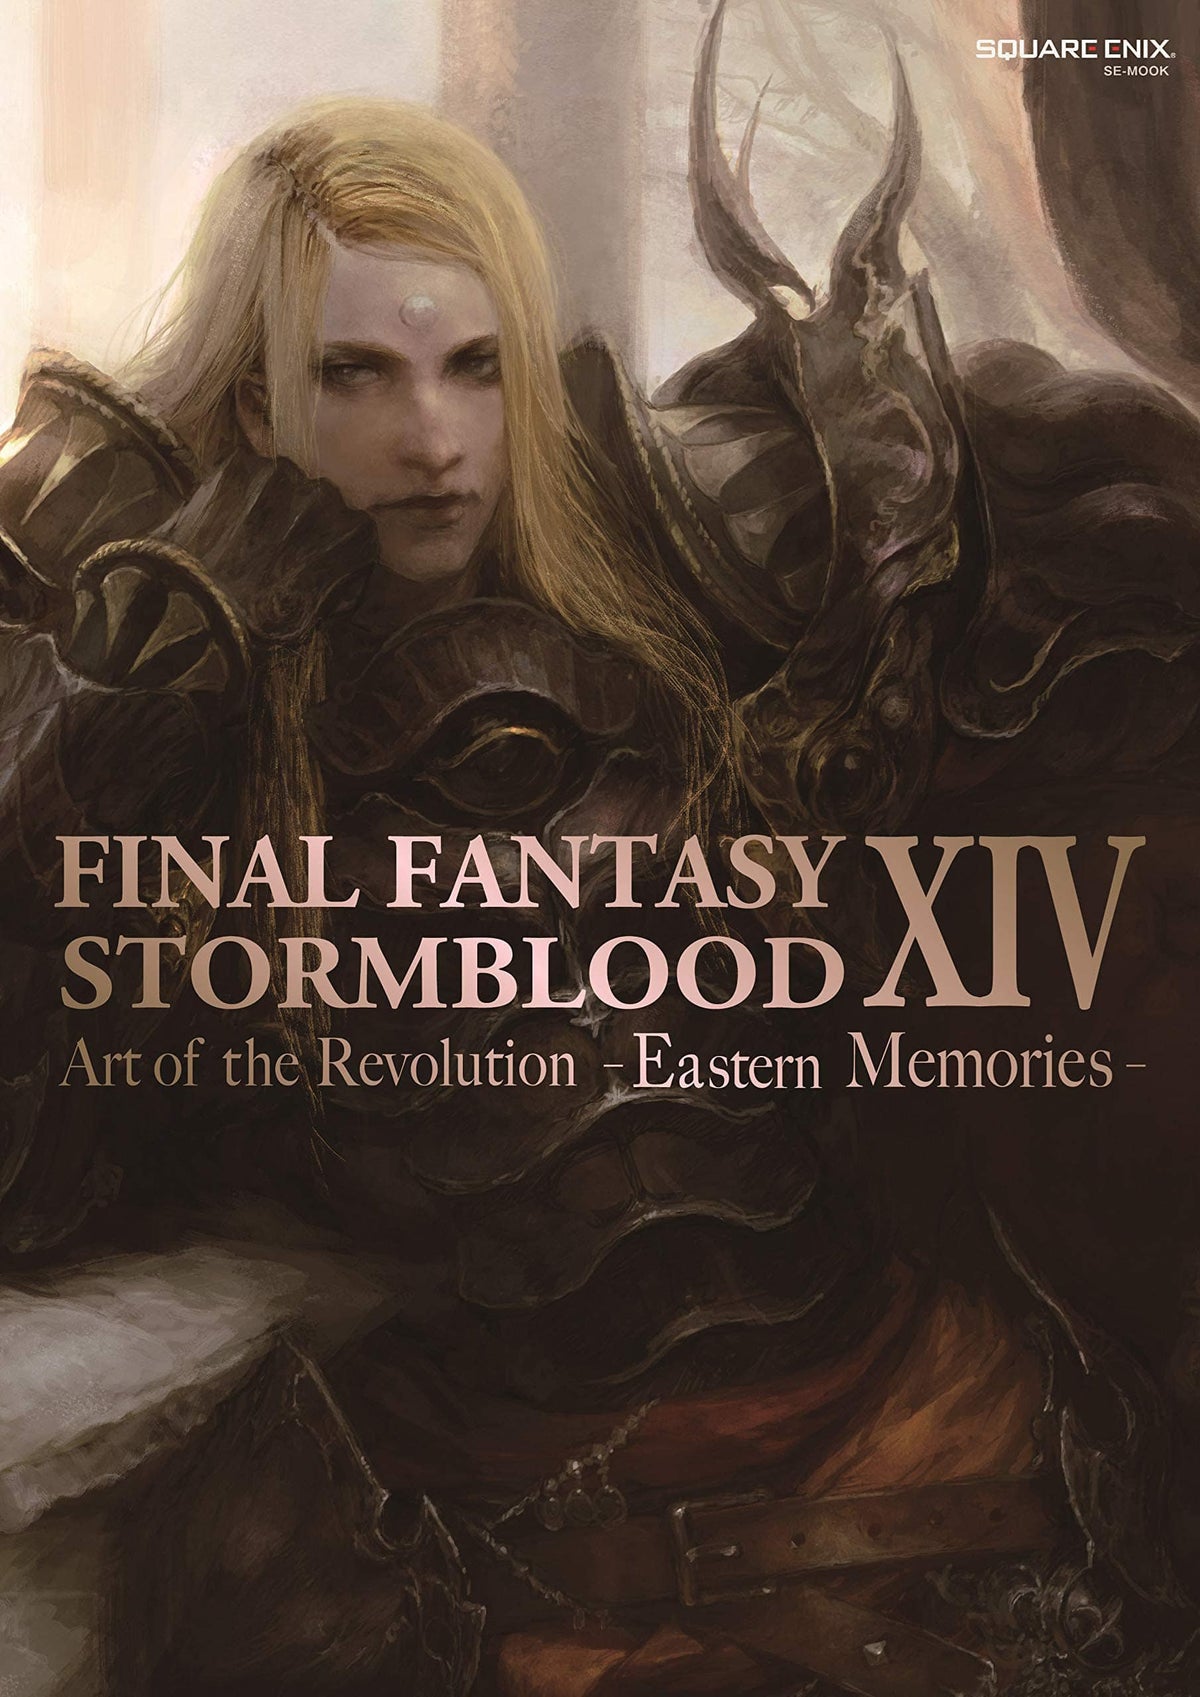 Final Fantasy XIV: Stormblood - Art of the Revolution, Easter Memories - Third Eye